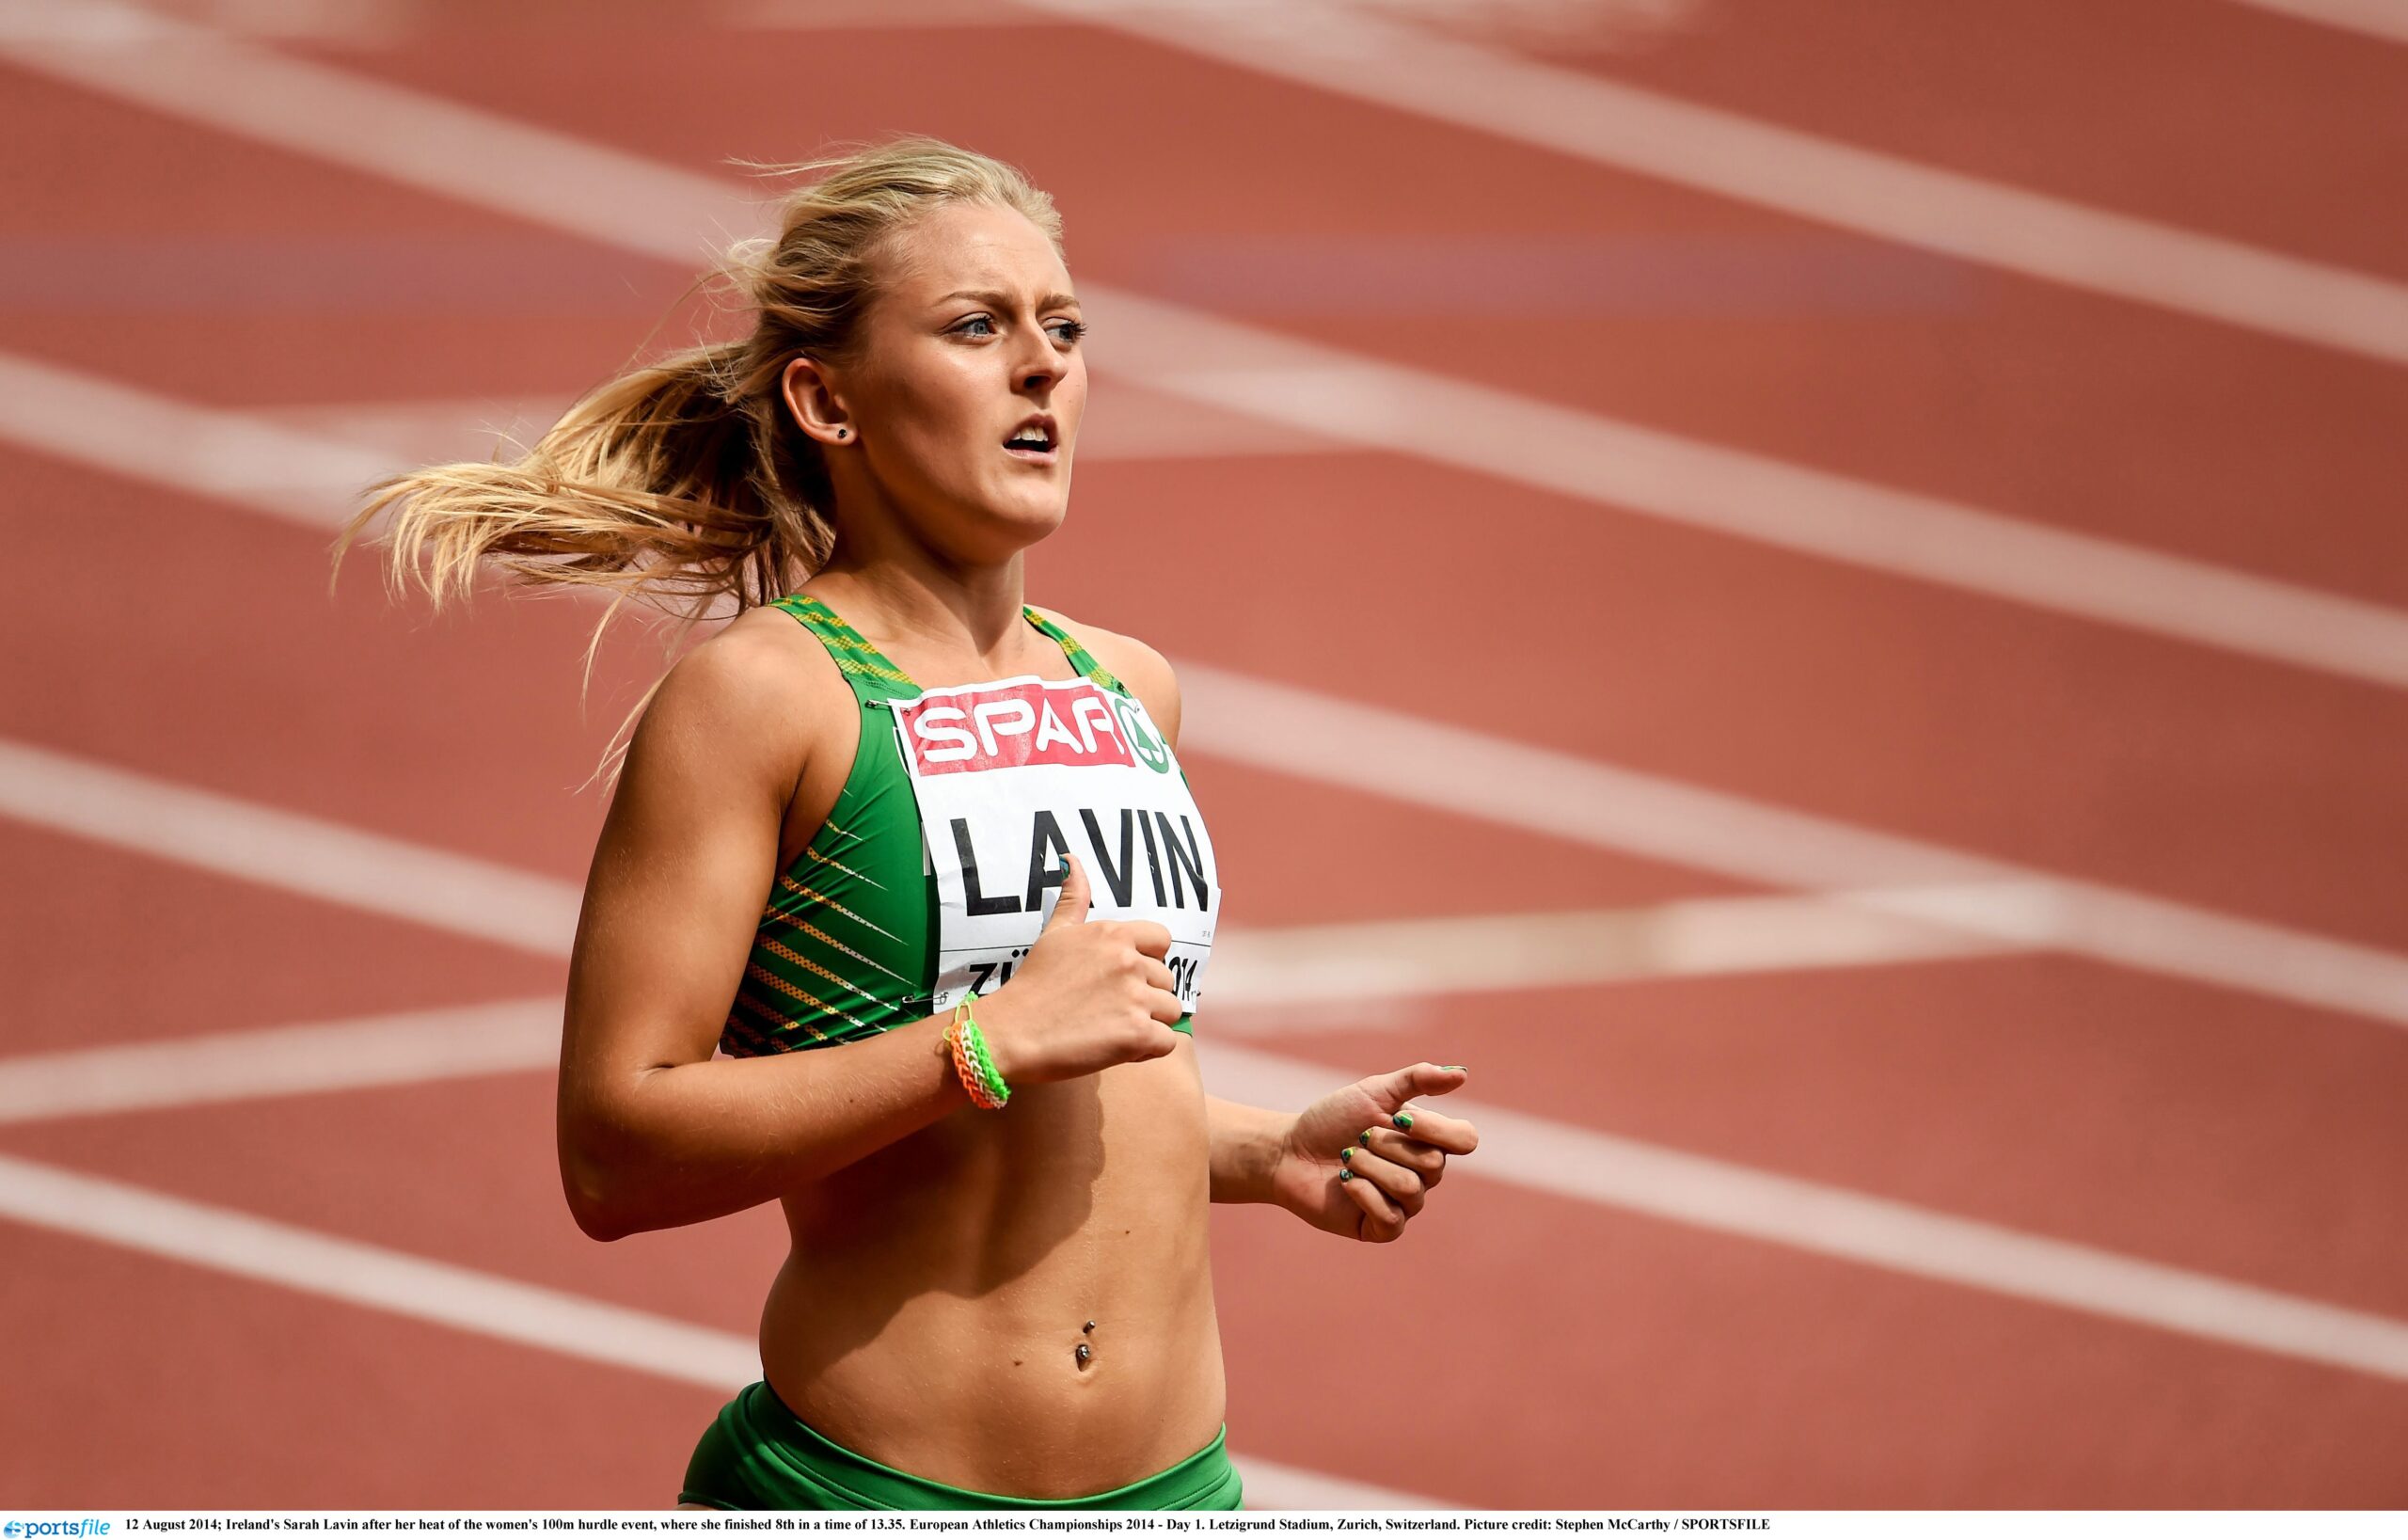 Women in Sport: Olympic athlete Sarah Lavin